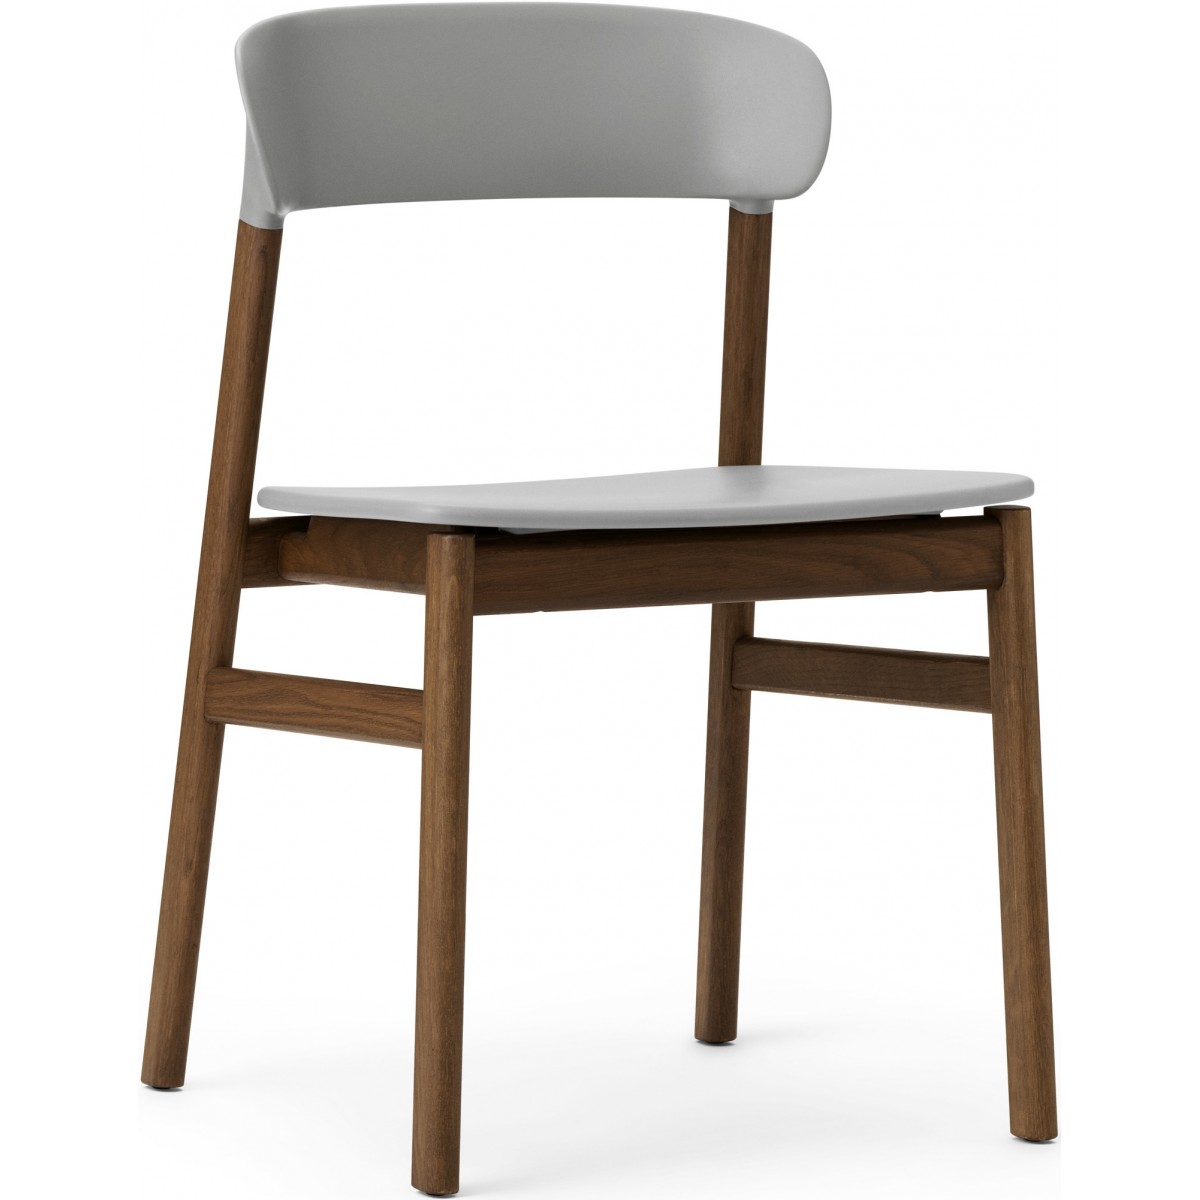 grey / smoked oak - Herit chair